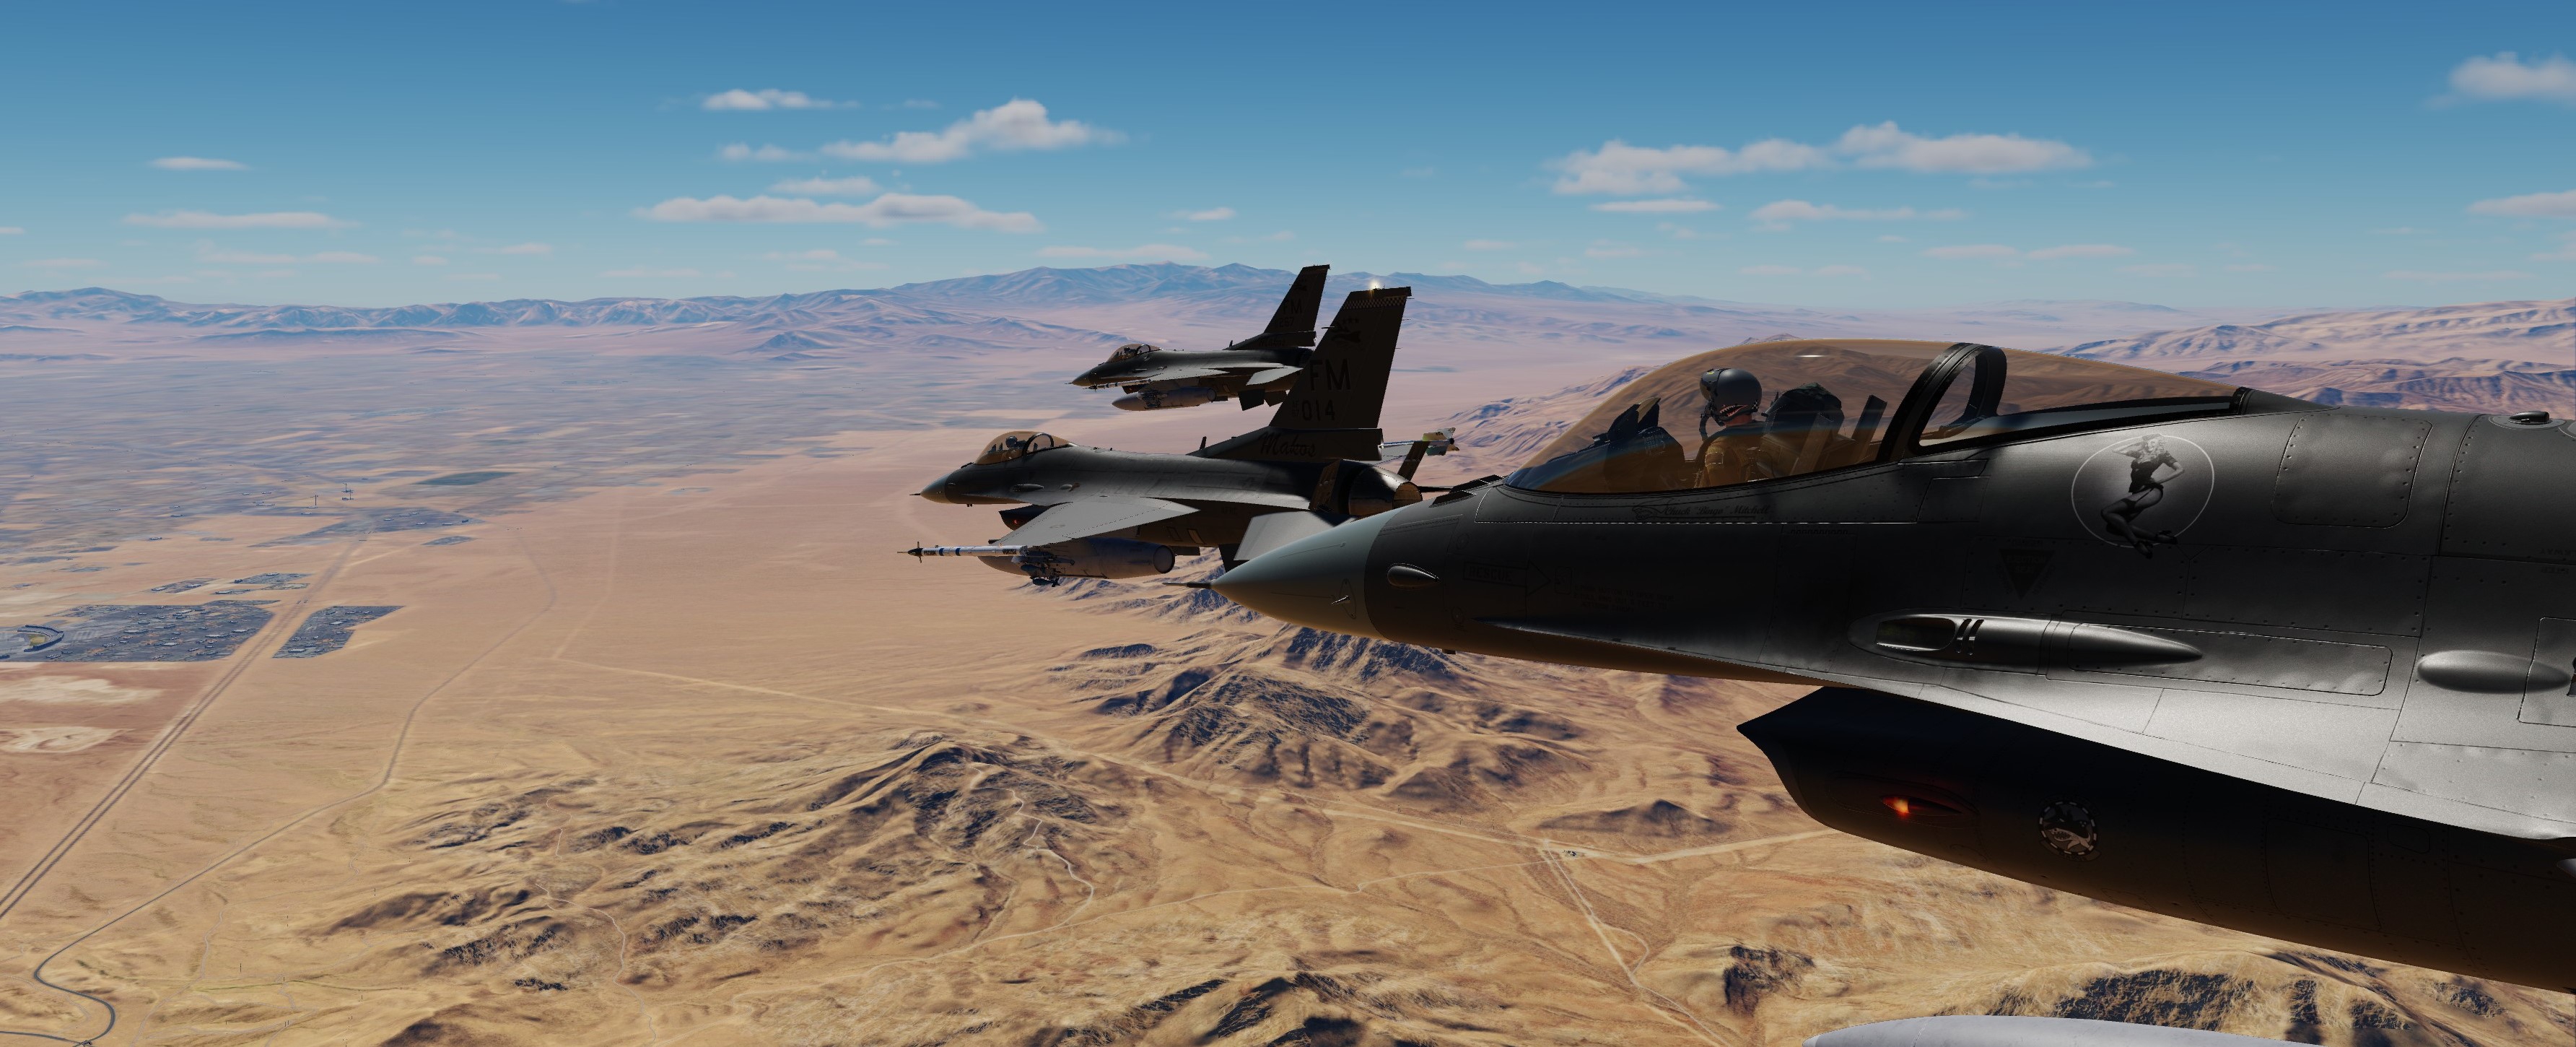 VFR approach, Nellis 21R